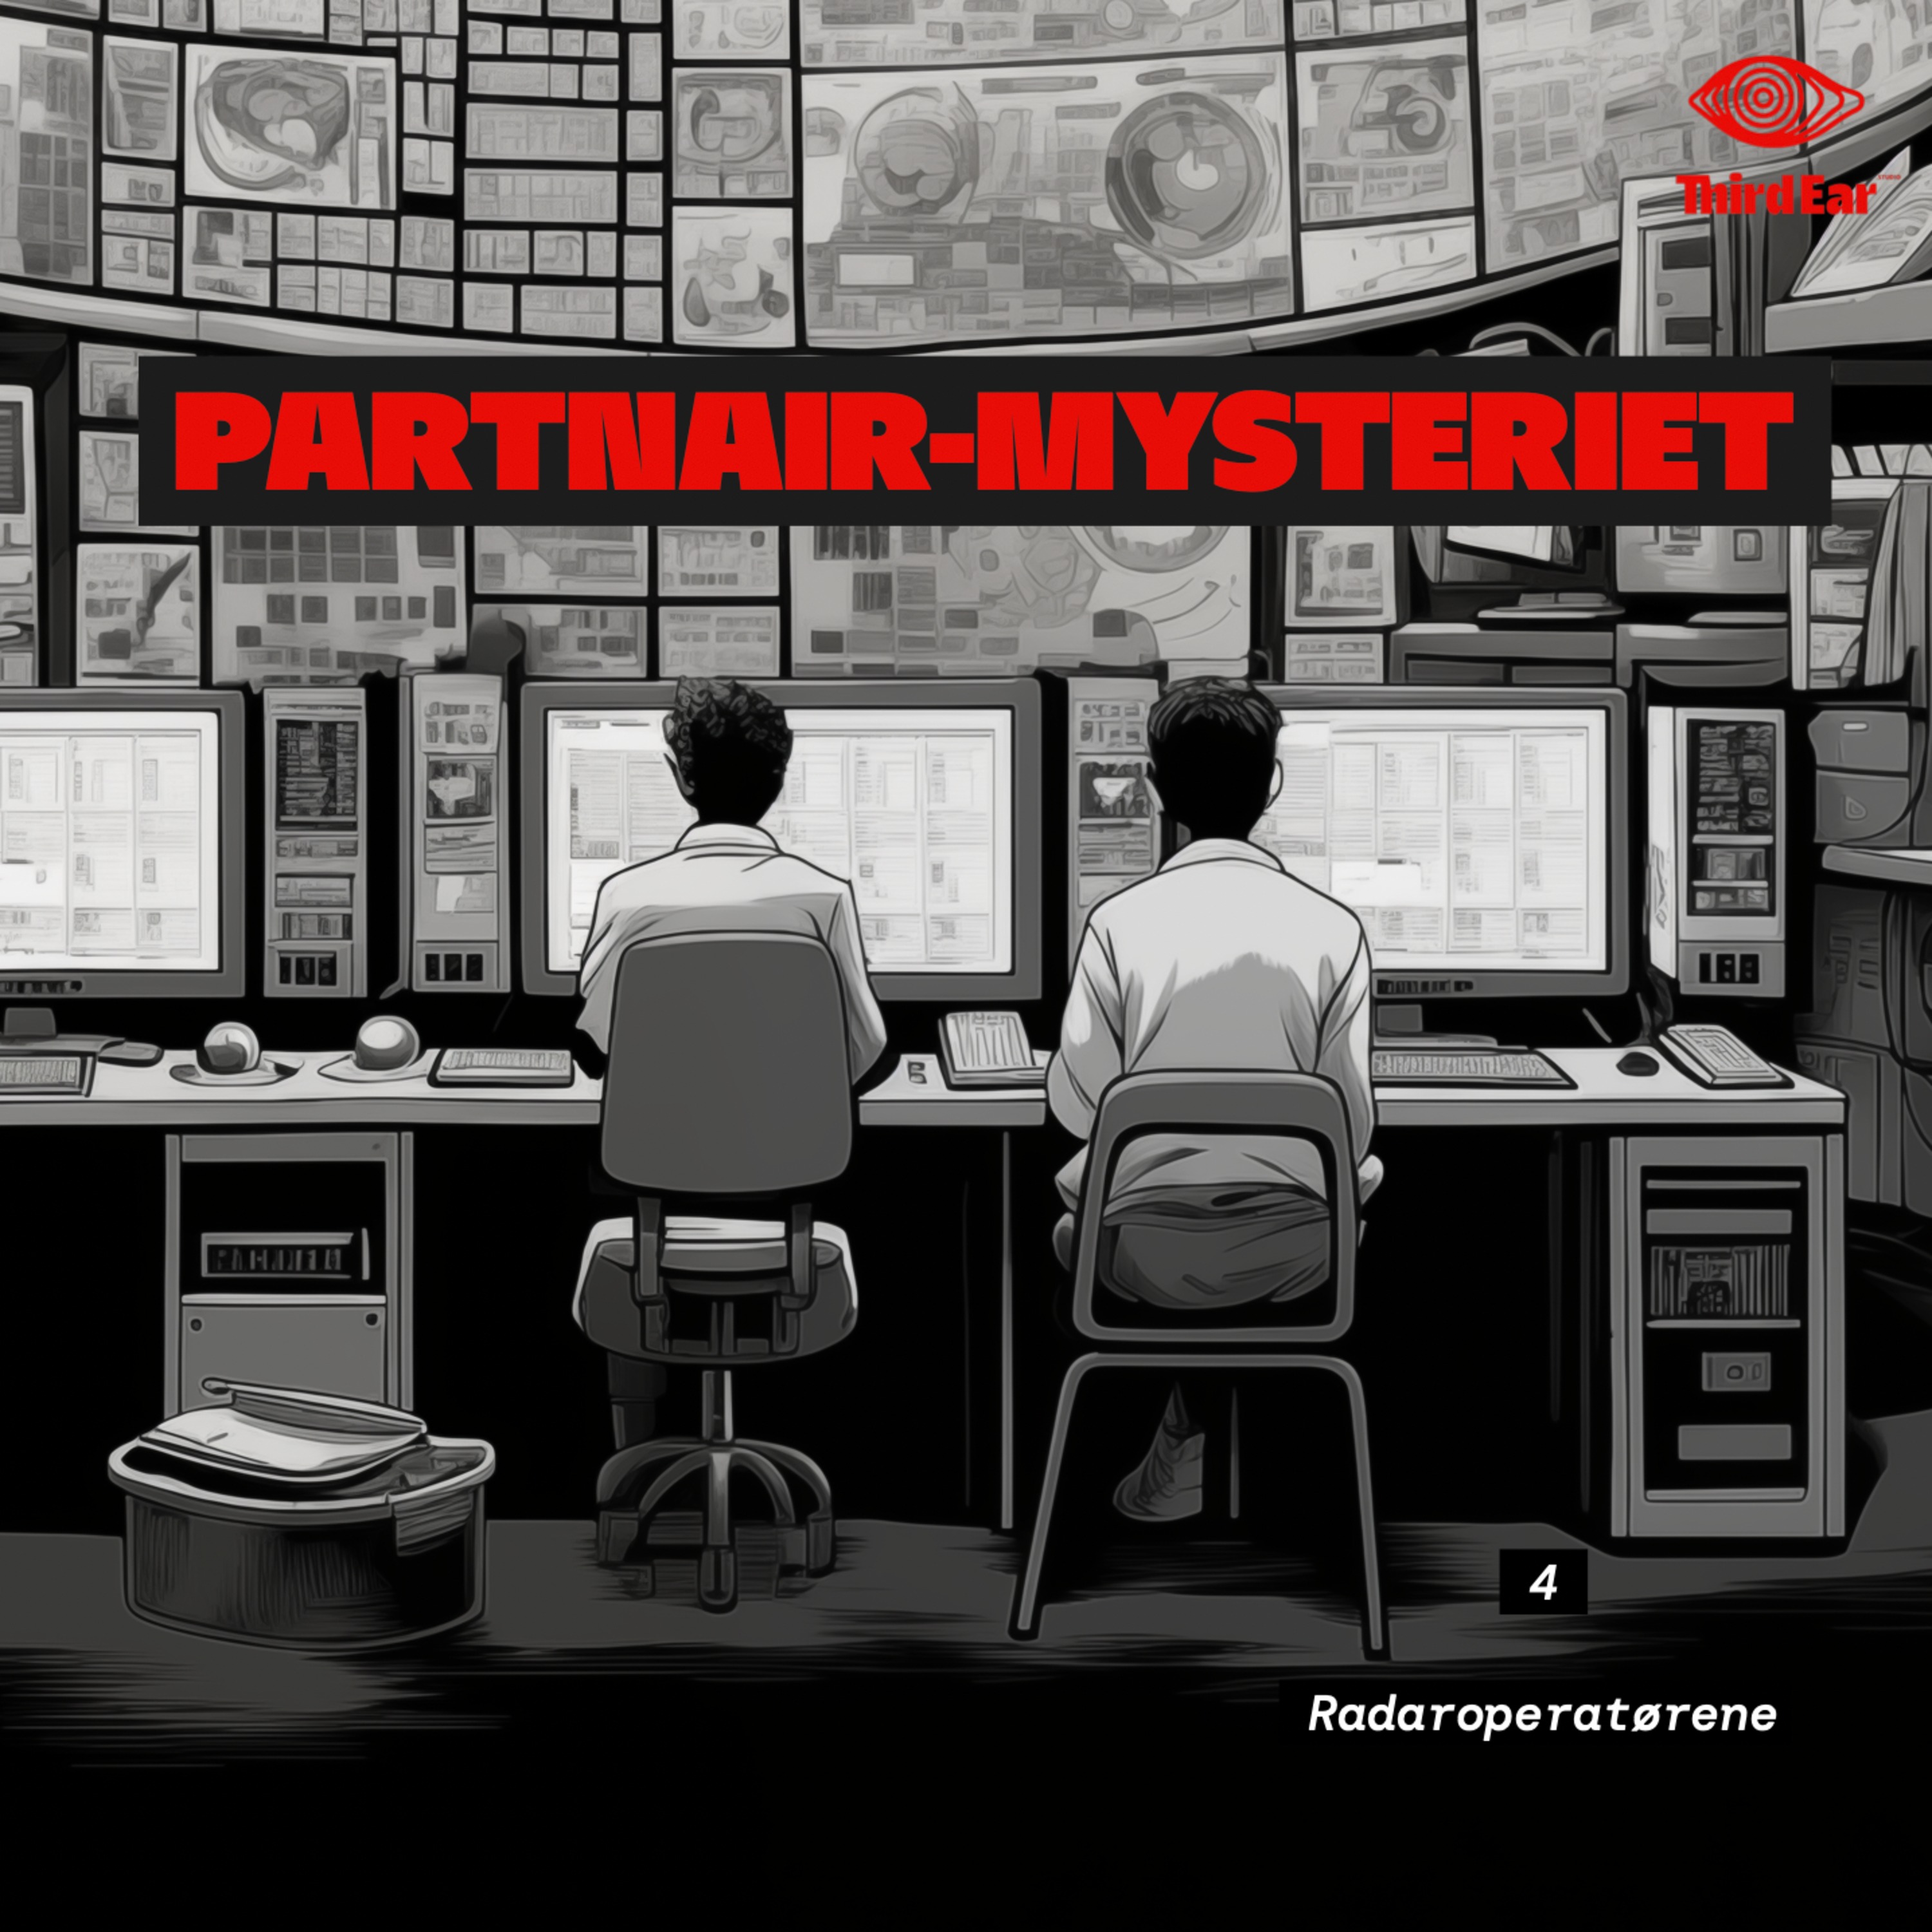 Partnair-mysteriet 4/5 - Radaroperatørene